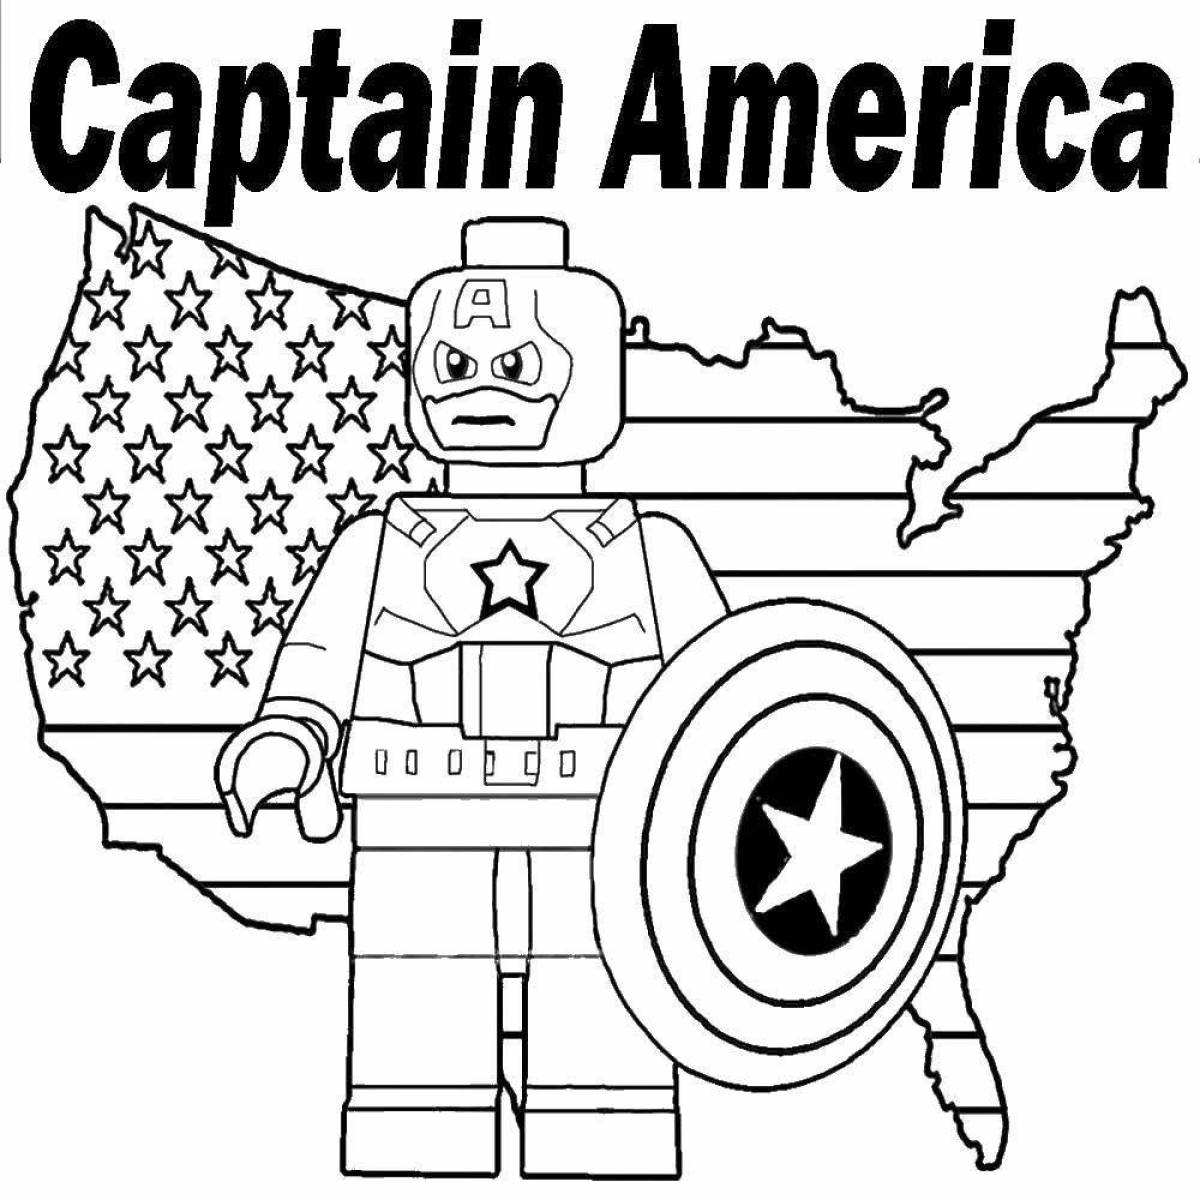 Раскраска лего Капитан Марвел